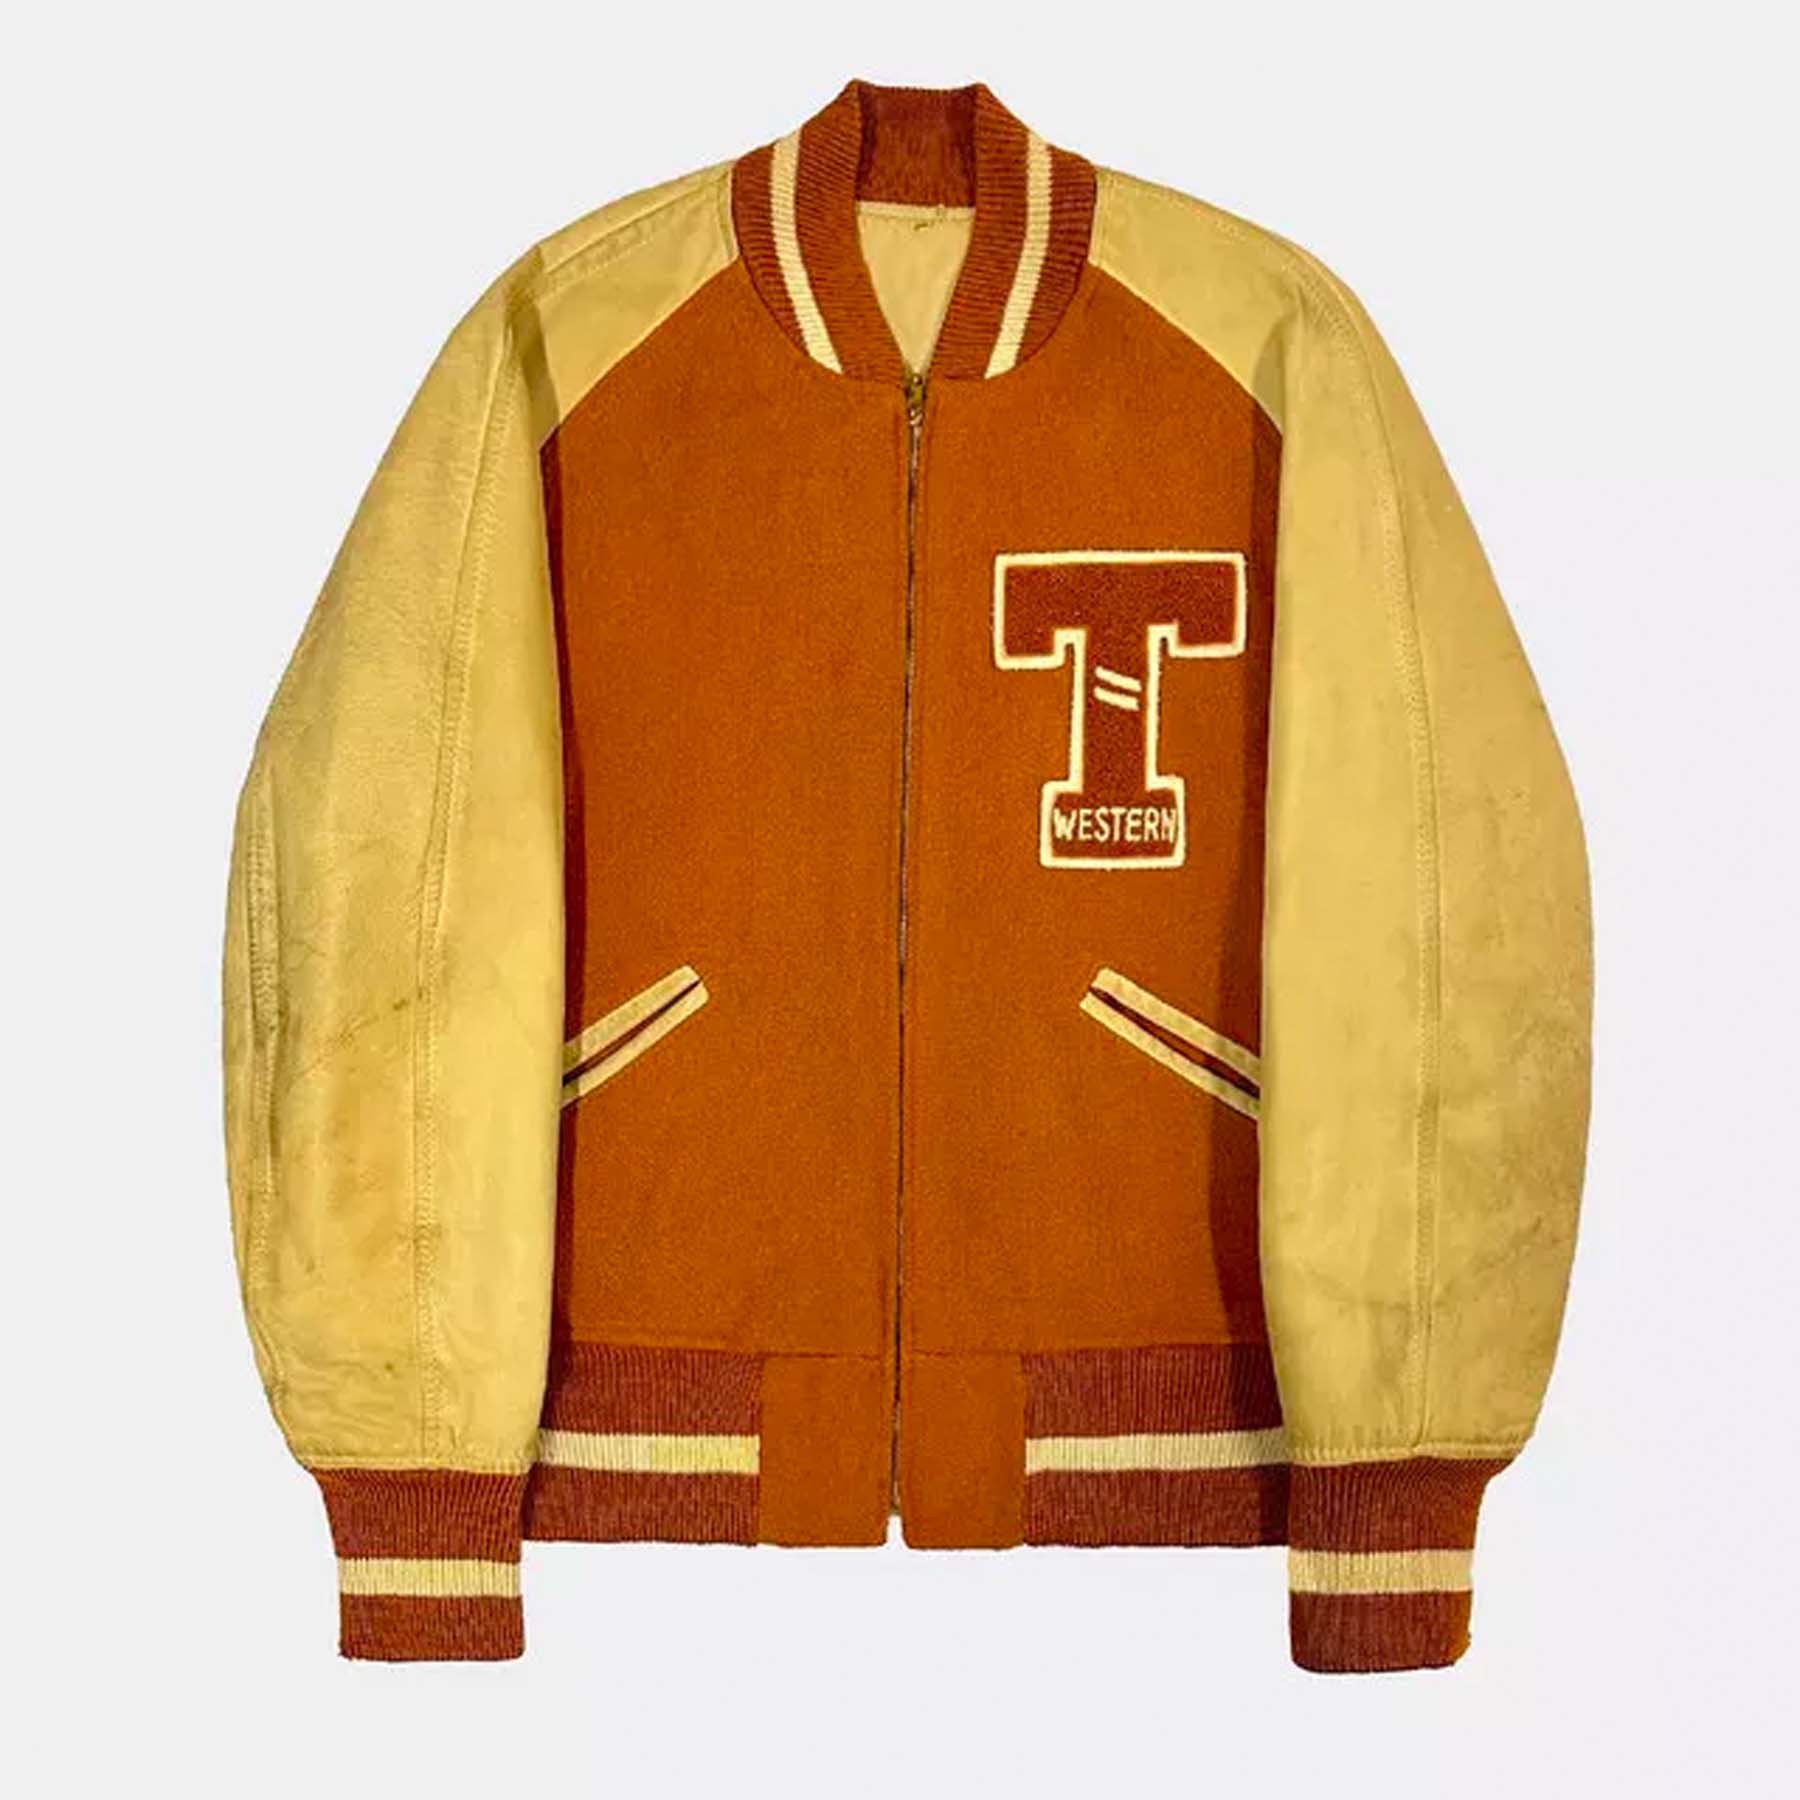 Maker of Jacket Varsity Jackets Vintage Texas High School Football